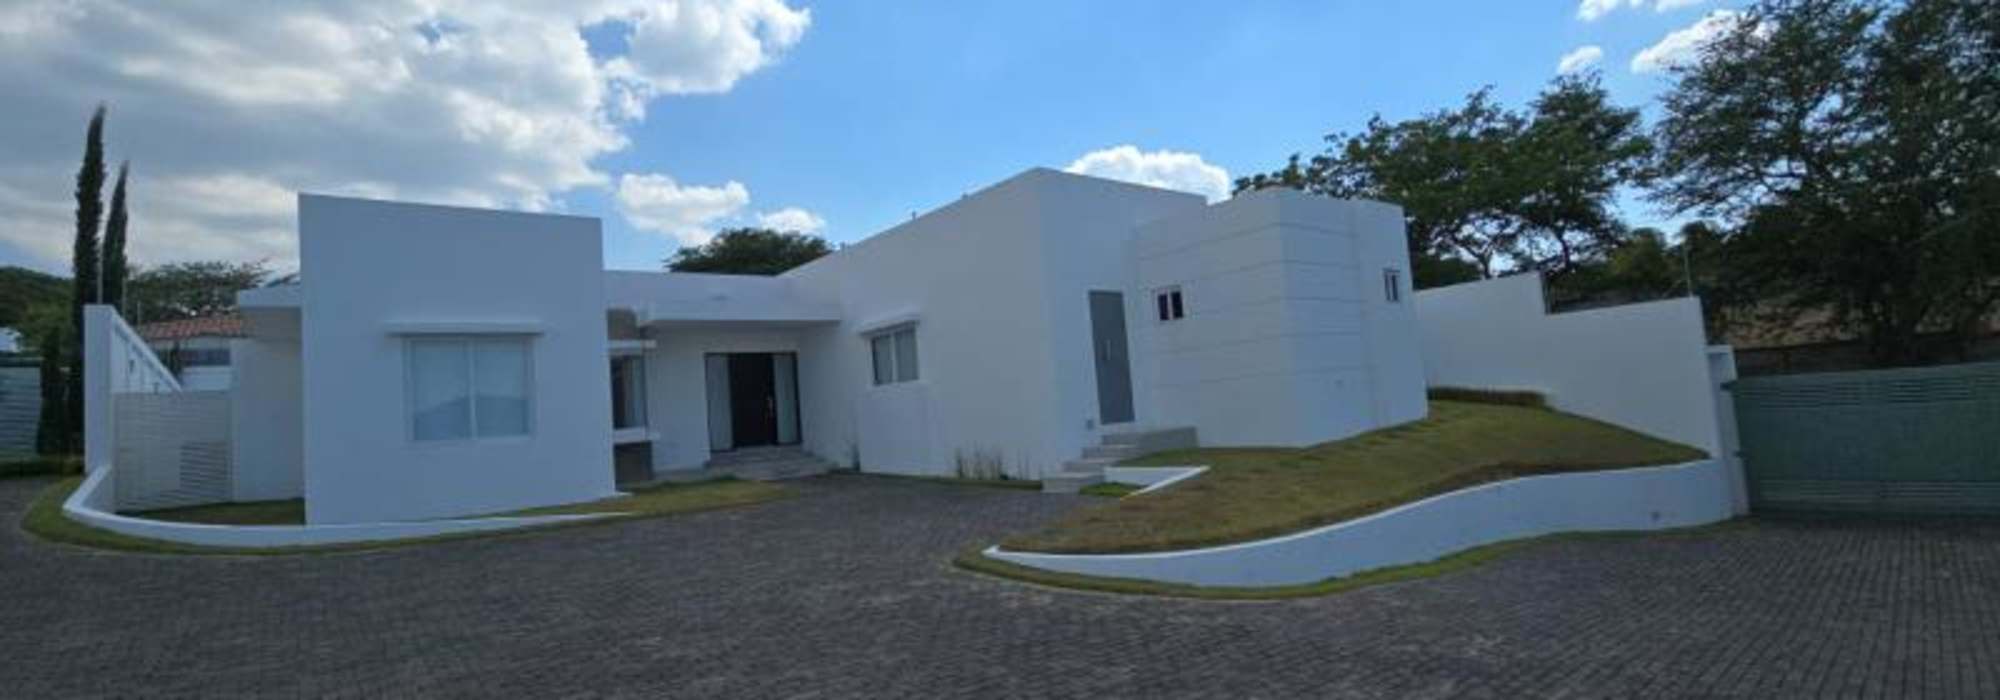 House in Condominio Palmares in Santo Domingo